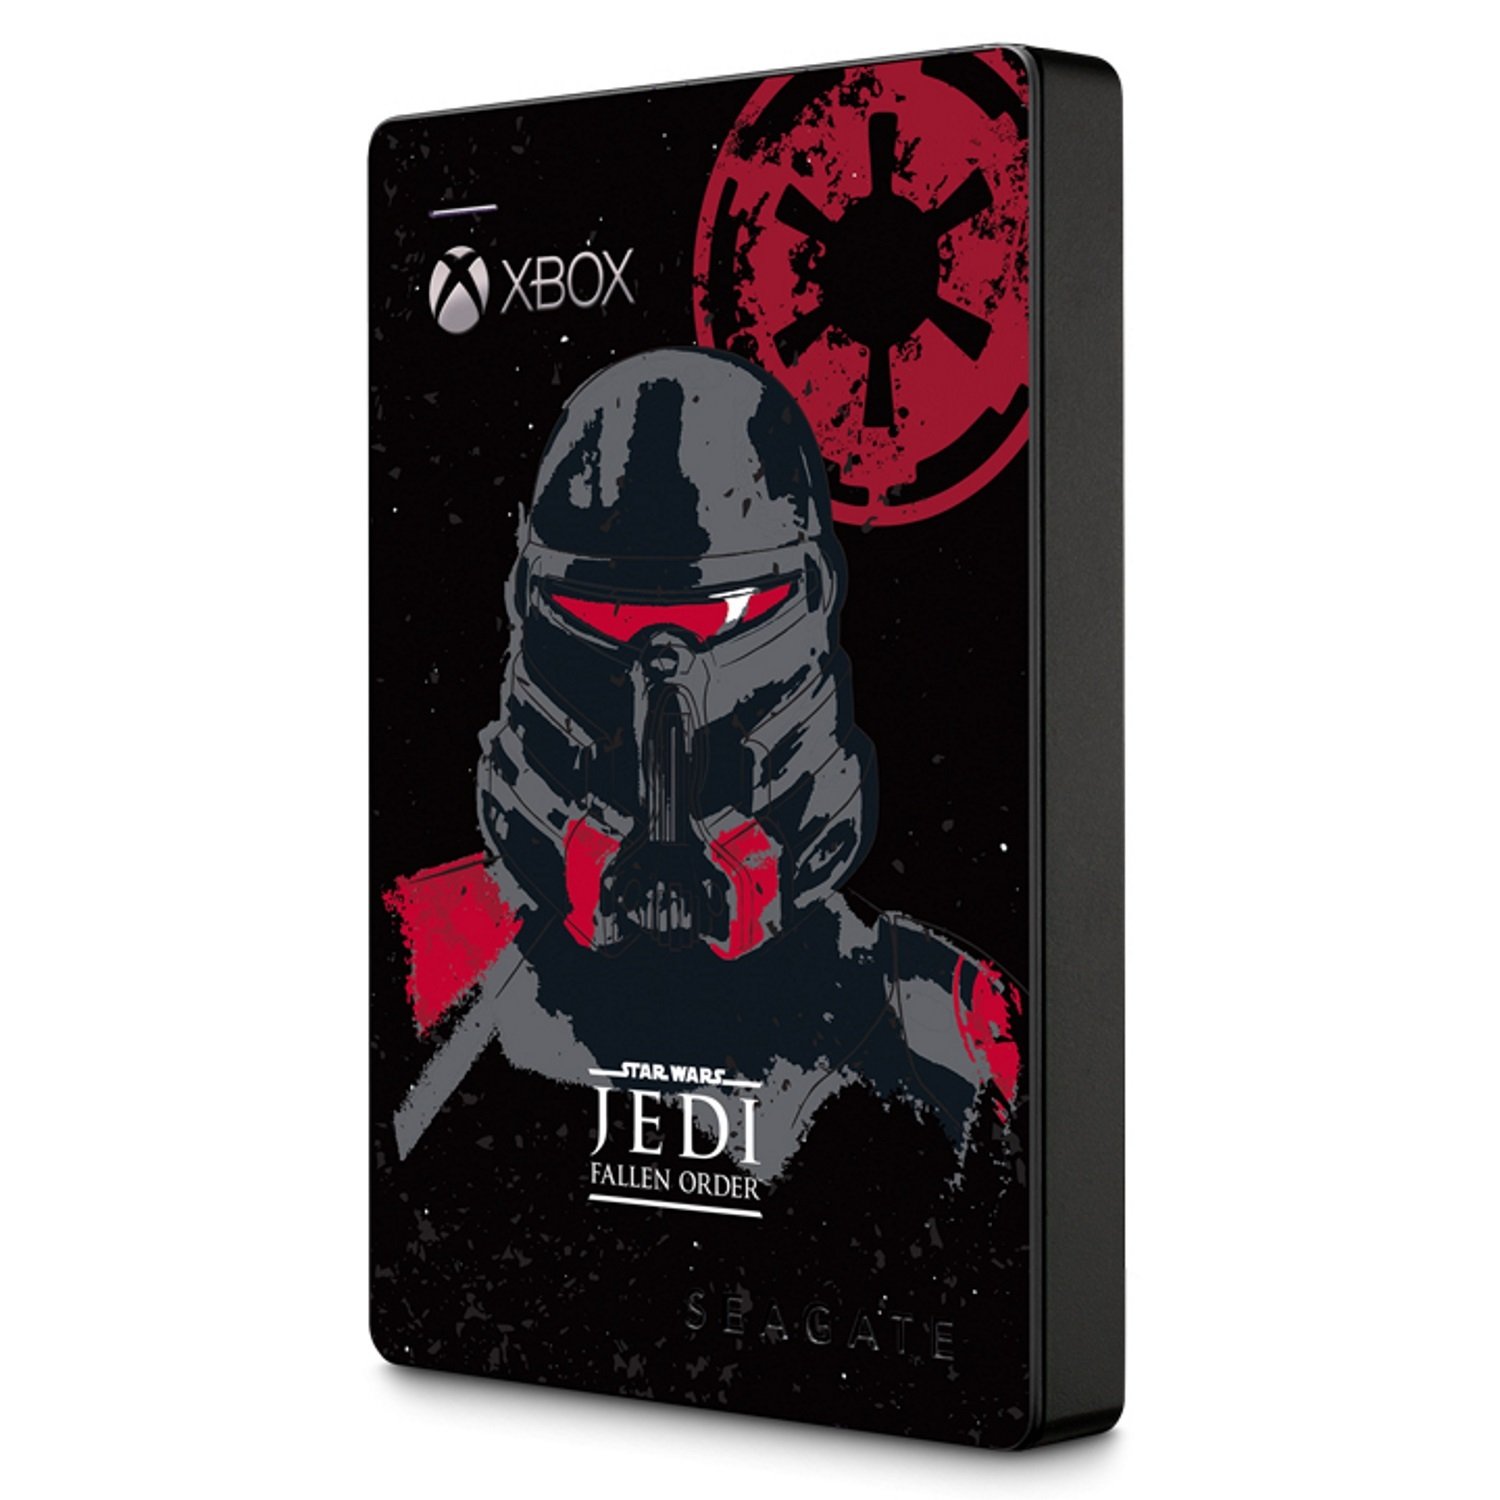 Seagate Star Wars Fallen Order 2TB XBox Portable Hard Drive Review